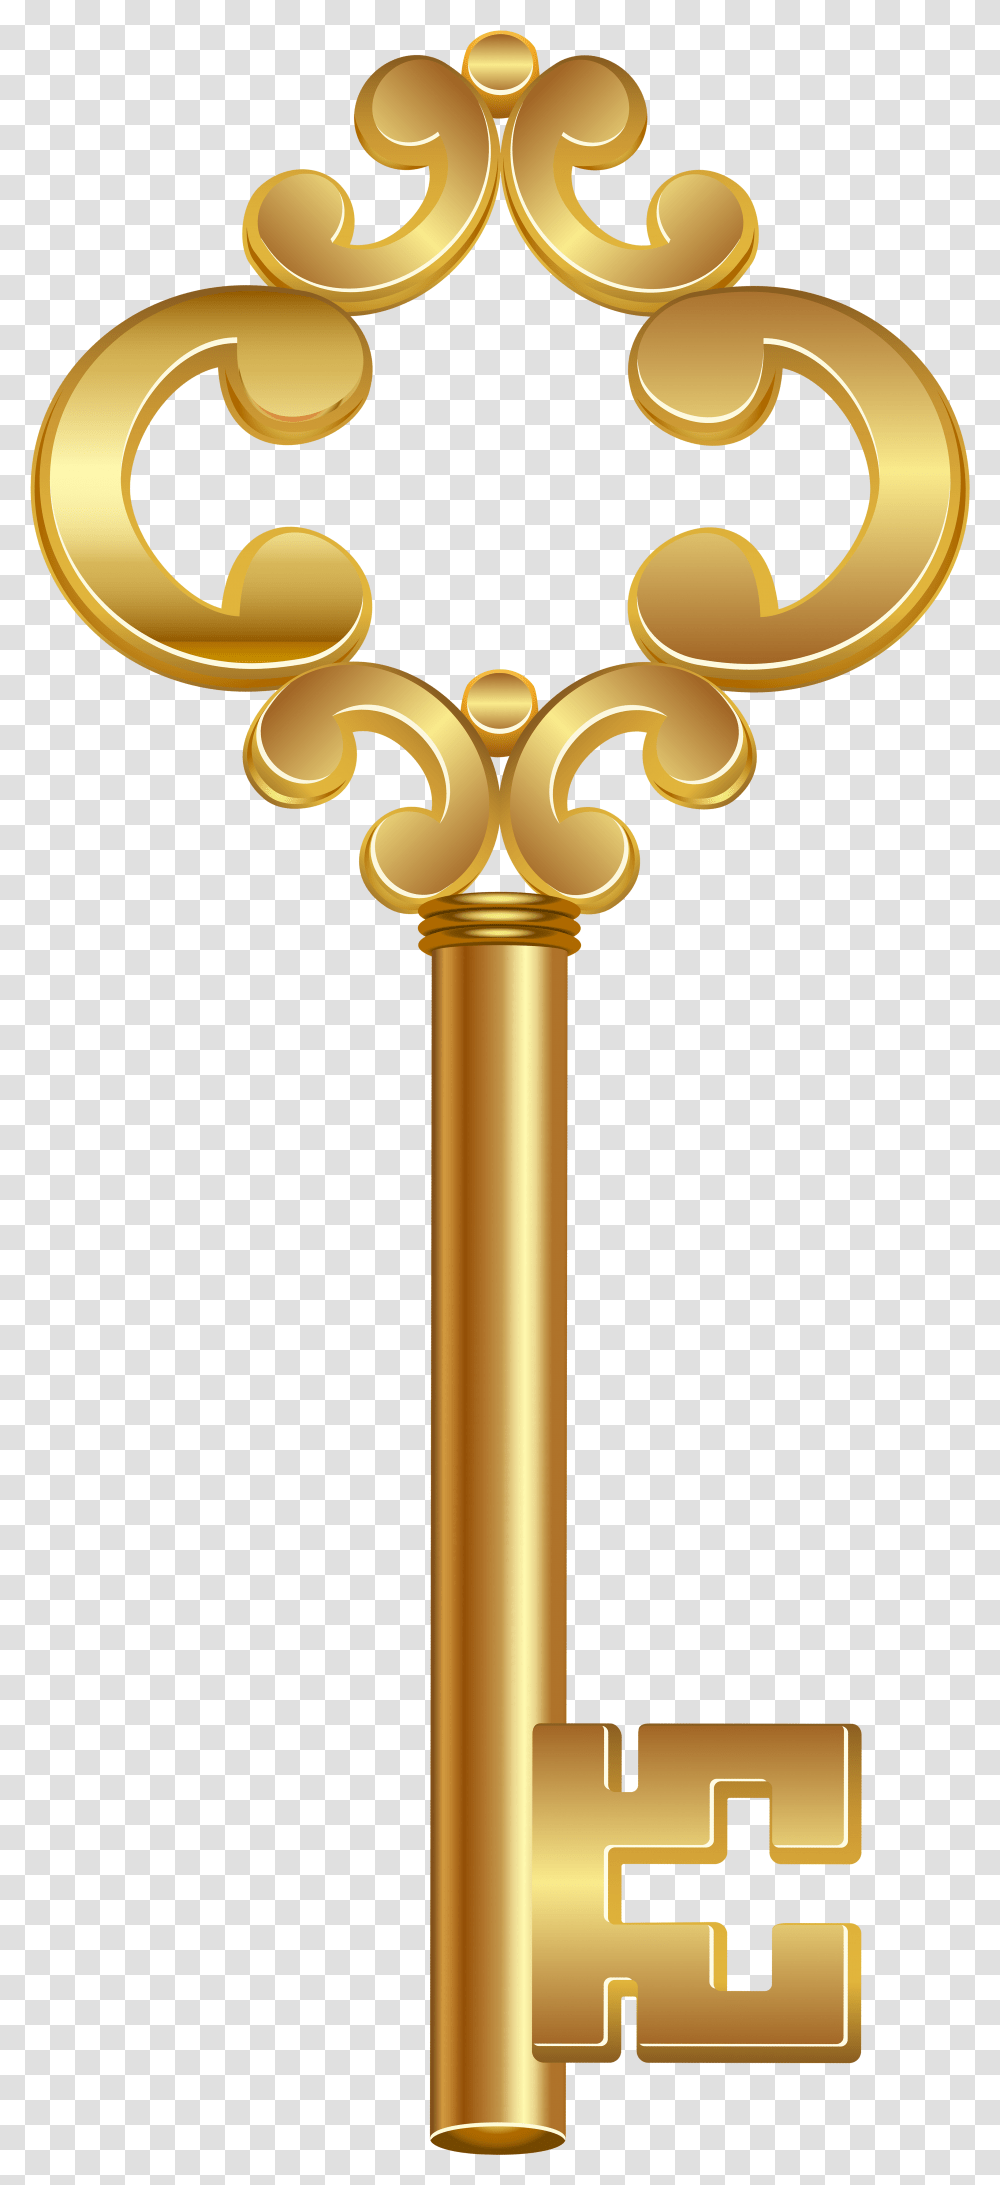 Золотой ключ